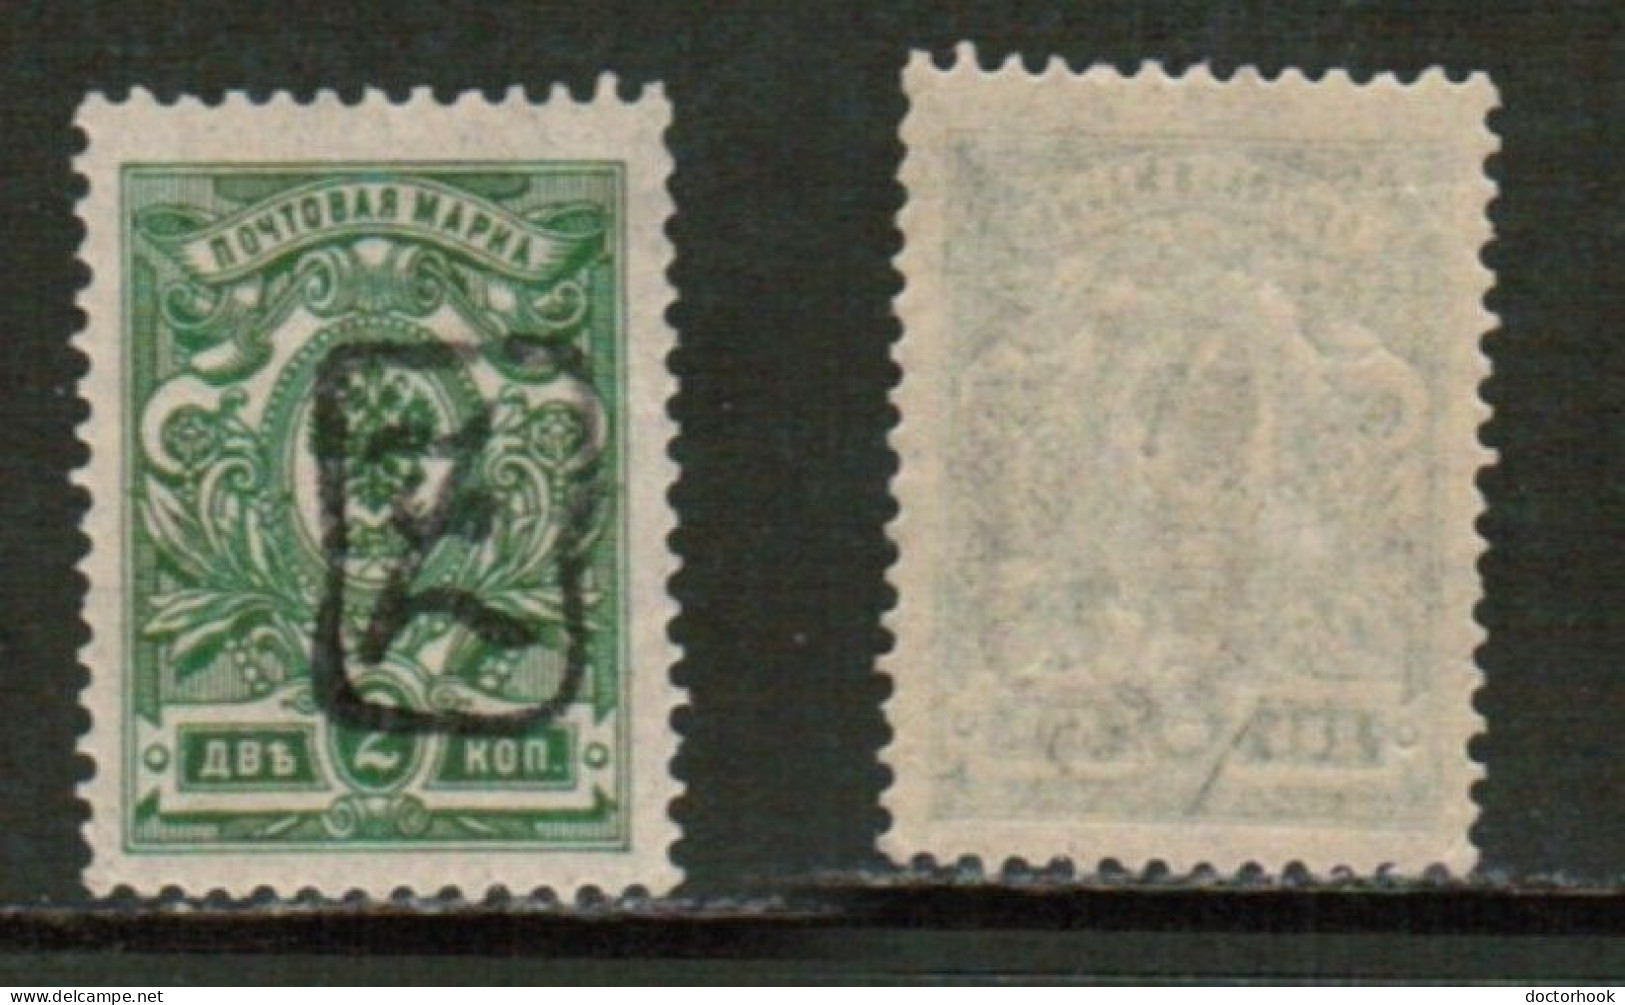 ARMANIA   Scott # 31a** MINT NH (CONDITION AS PER SCAN) (Stamp Scan # 920-5) - Arménie